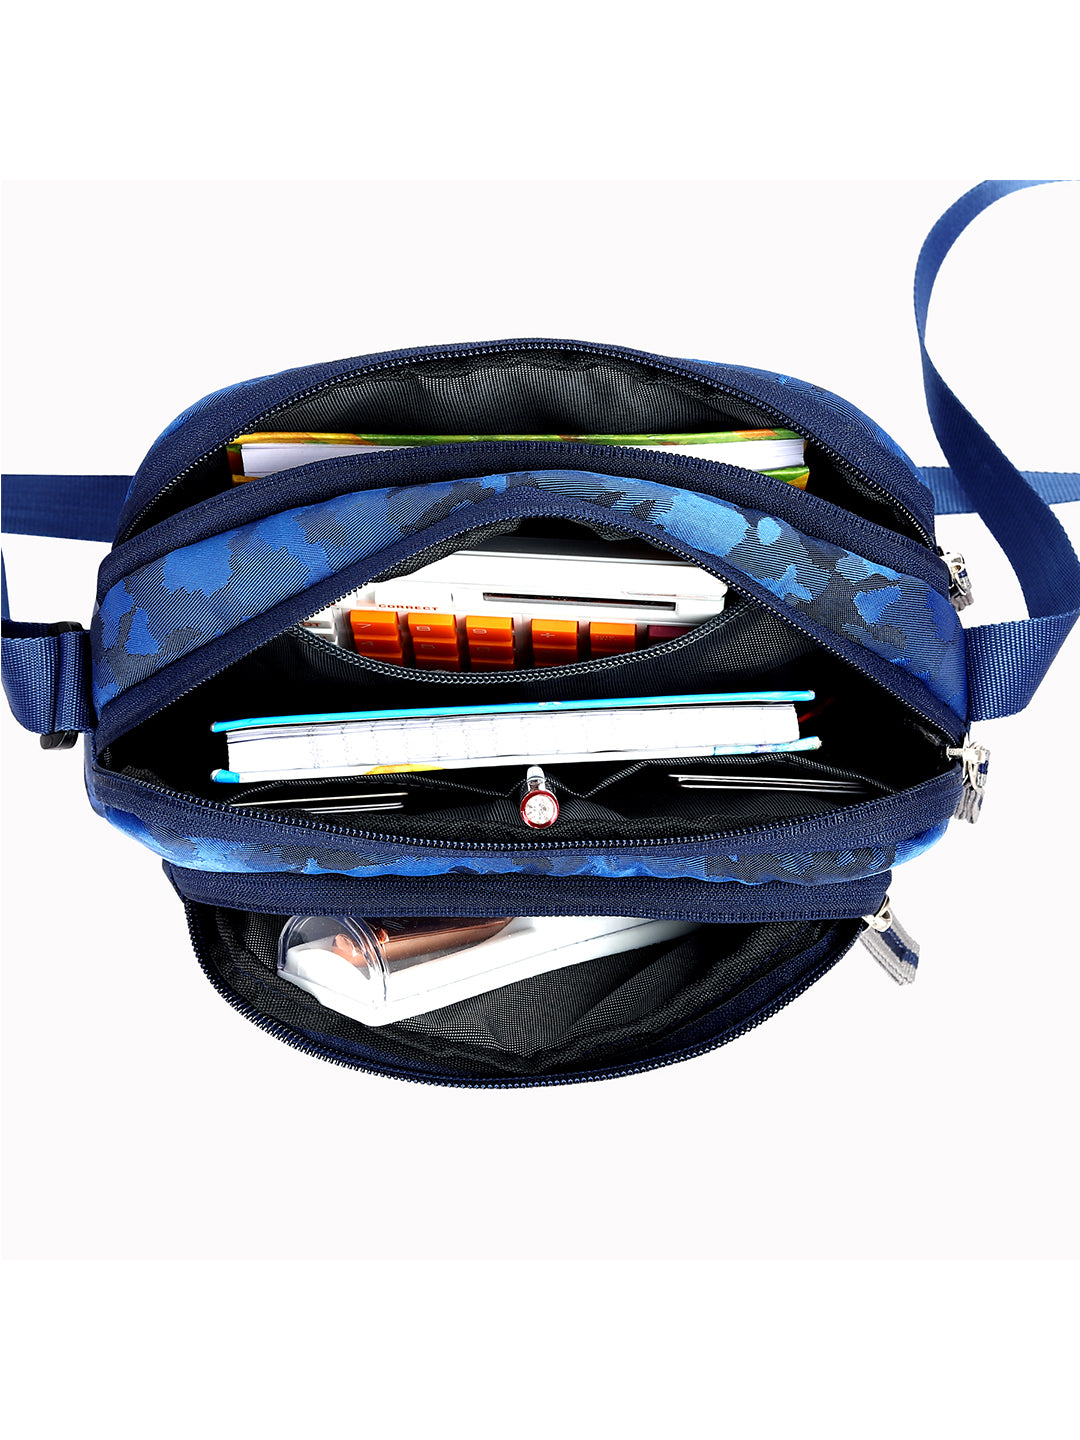 Fly Fashion Sling Bag Minimalist Chest Shoulder Backpack Crossbody Bag for Men and Women Lightweight Everyday Carry Bag for Travel, Work, Gym Sport